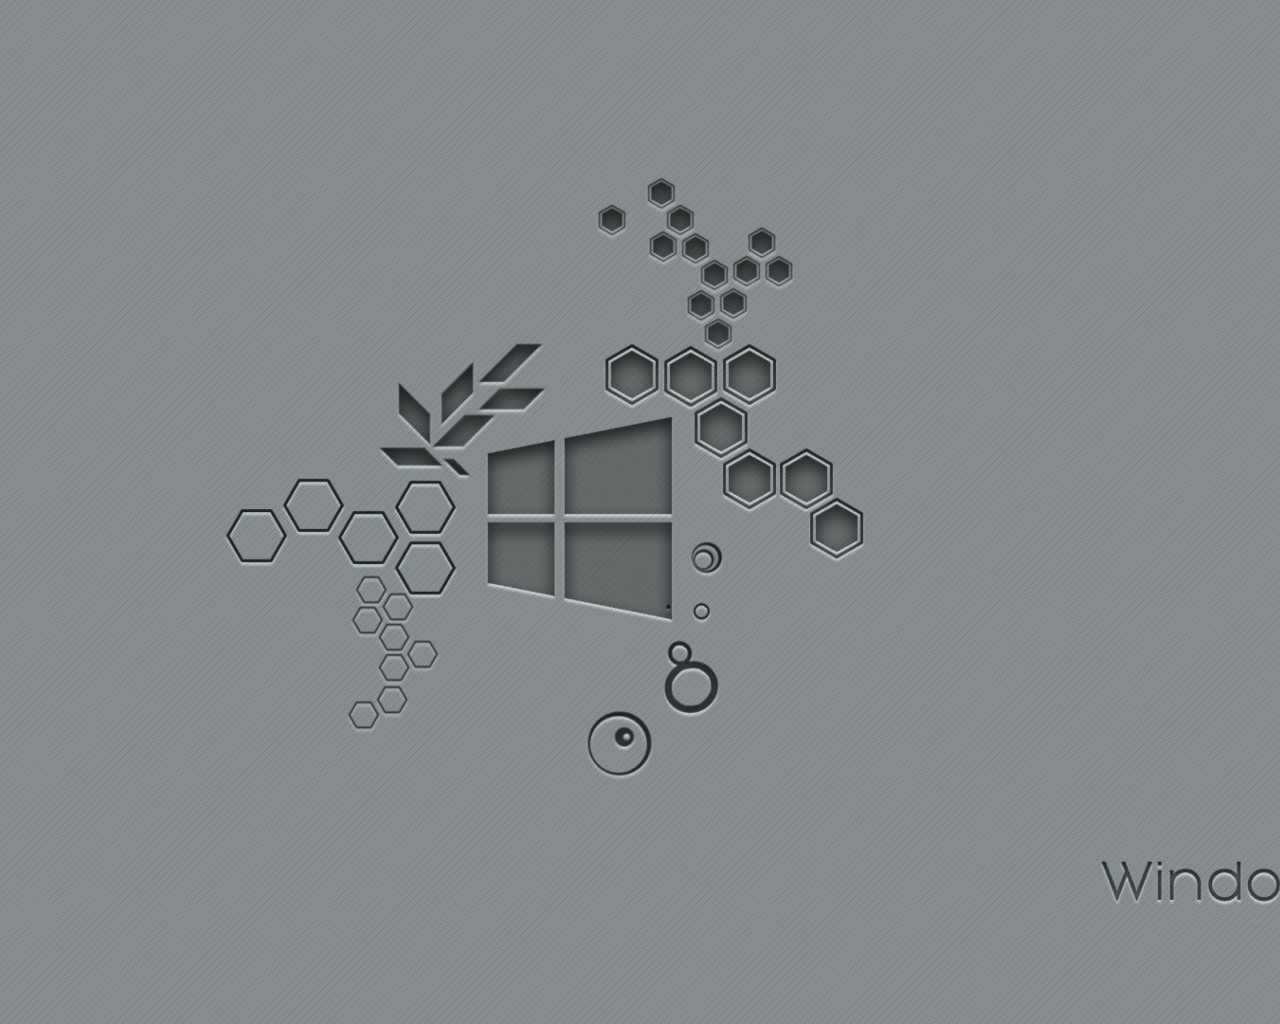 Windows 10 icon on gray background